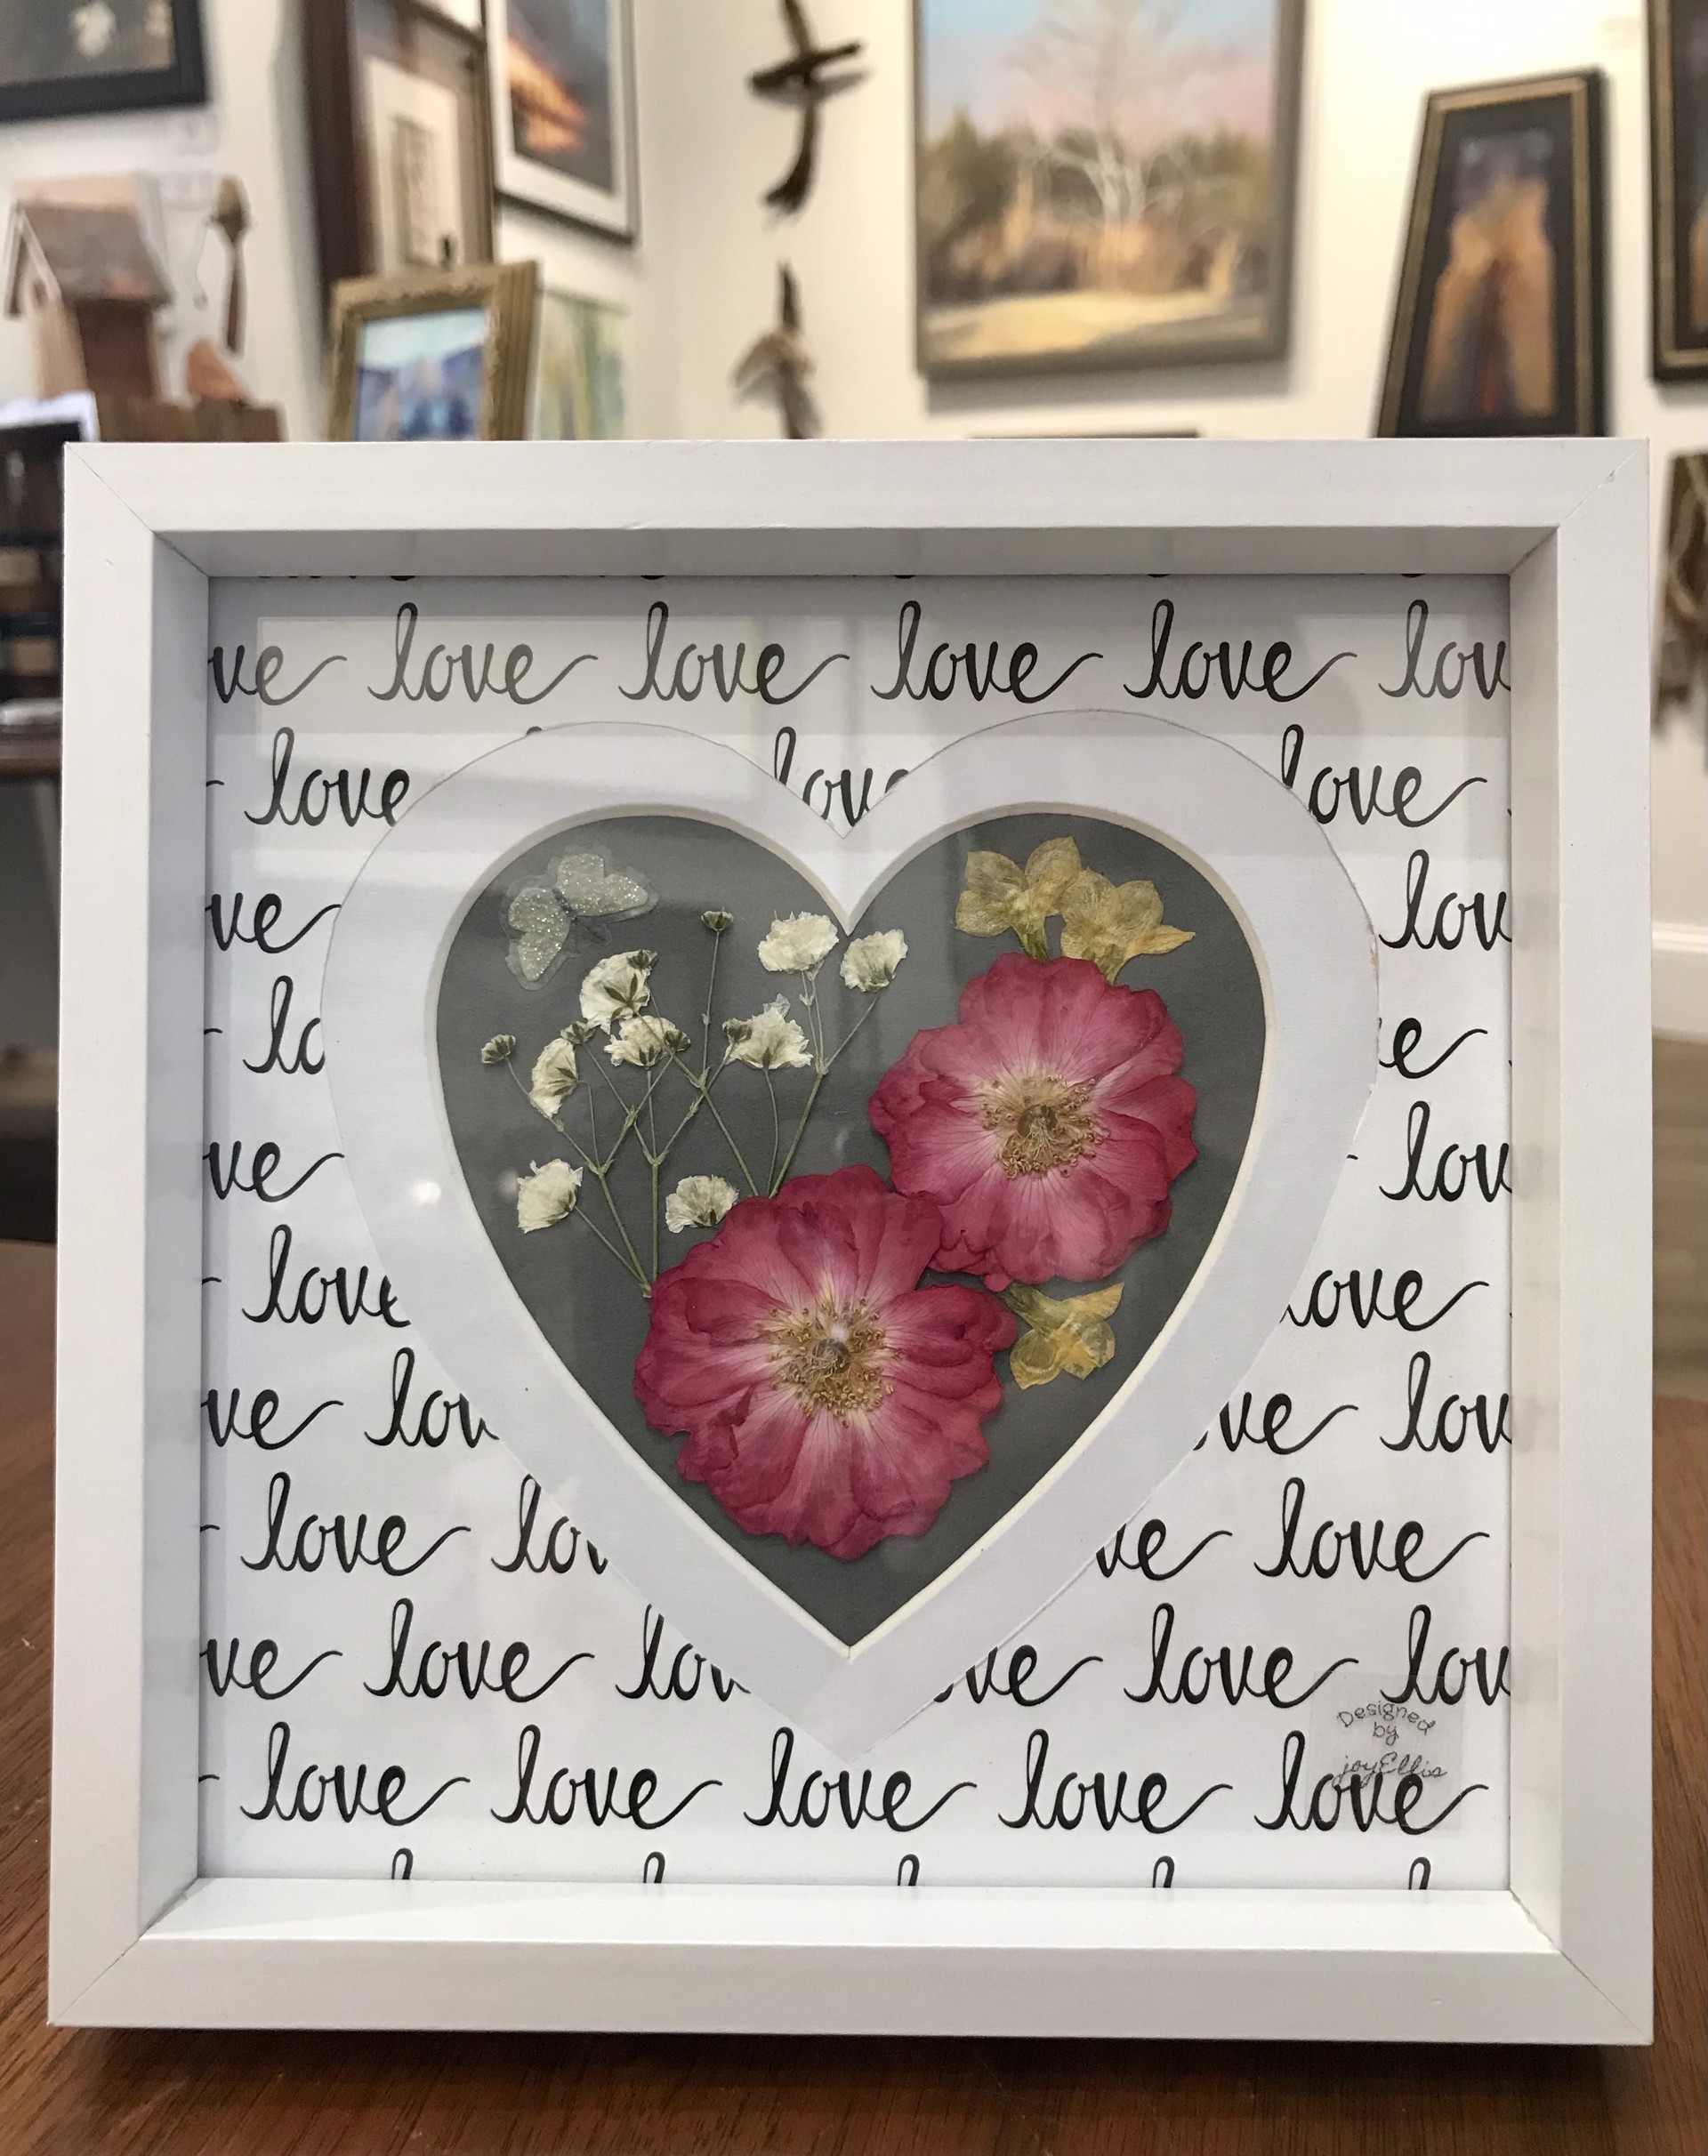 Love # 1 by Joy Ellis